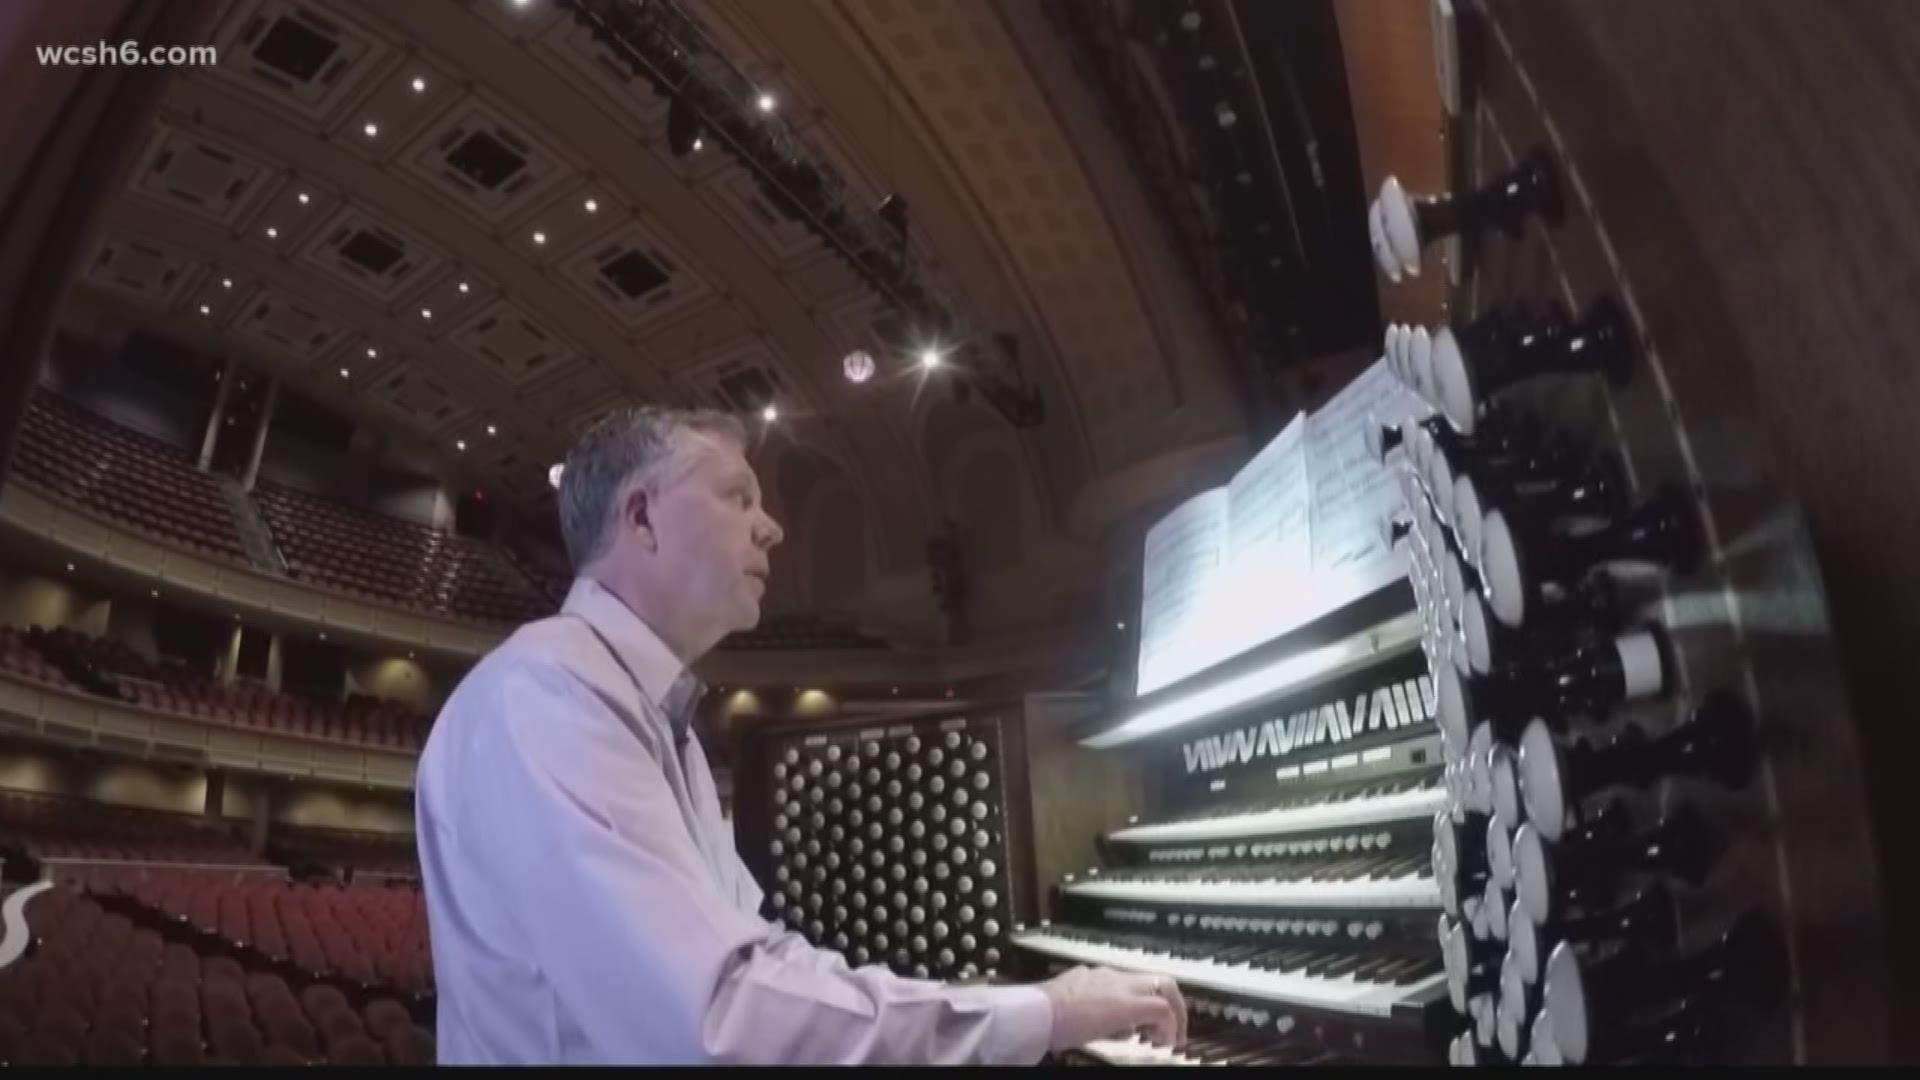 Portland's municipal organist retiring